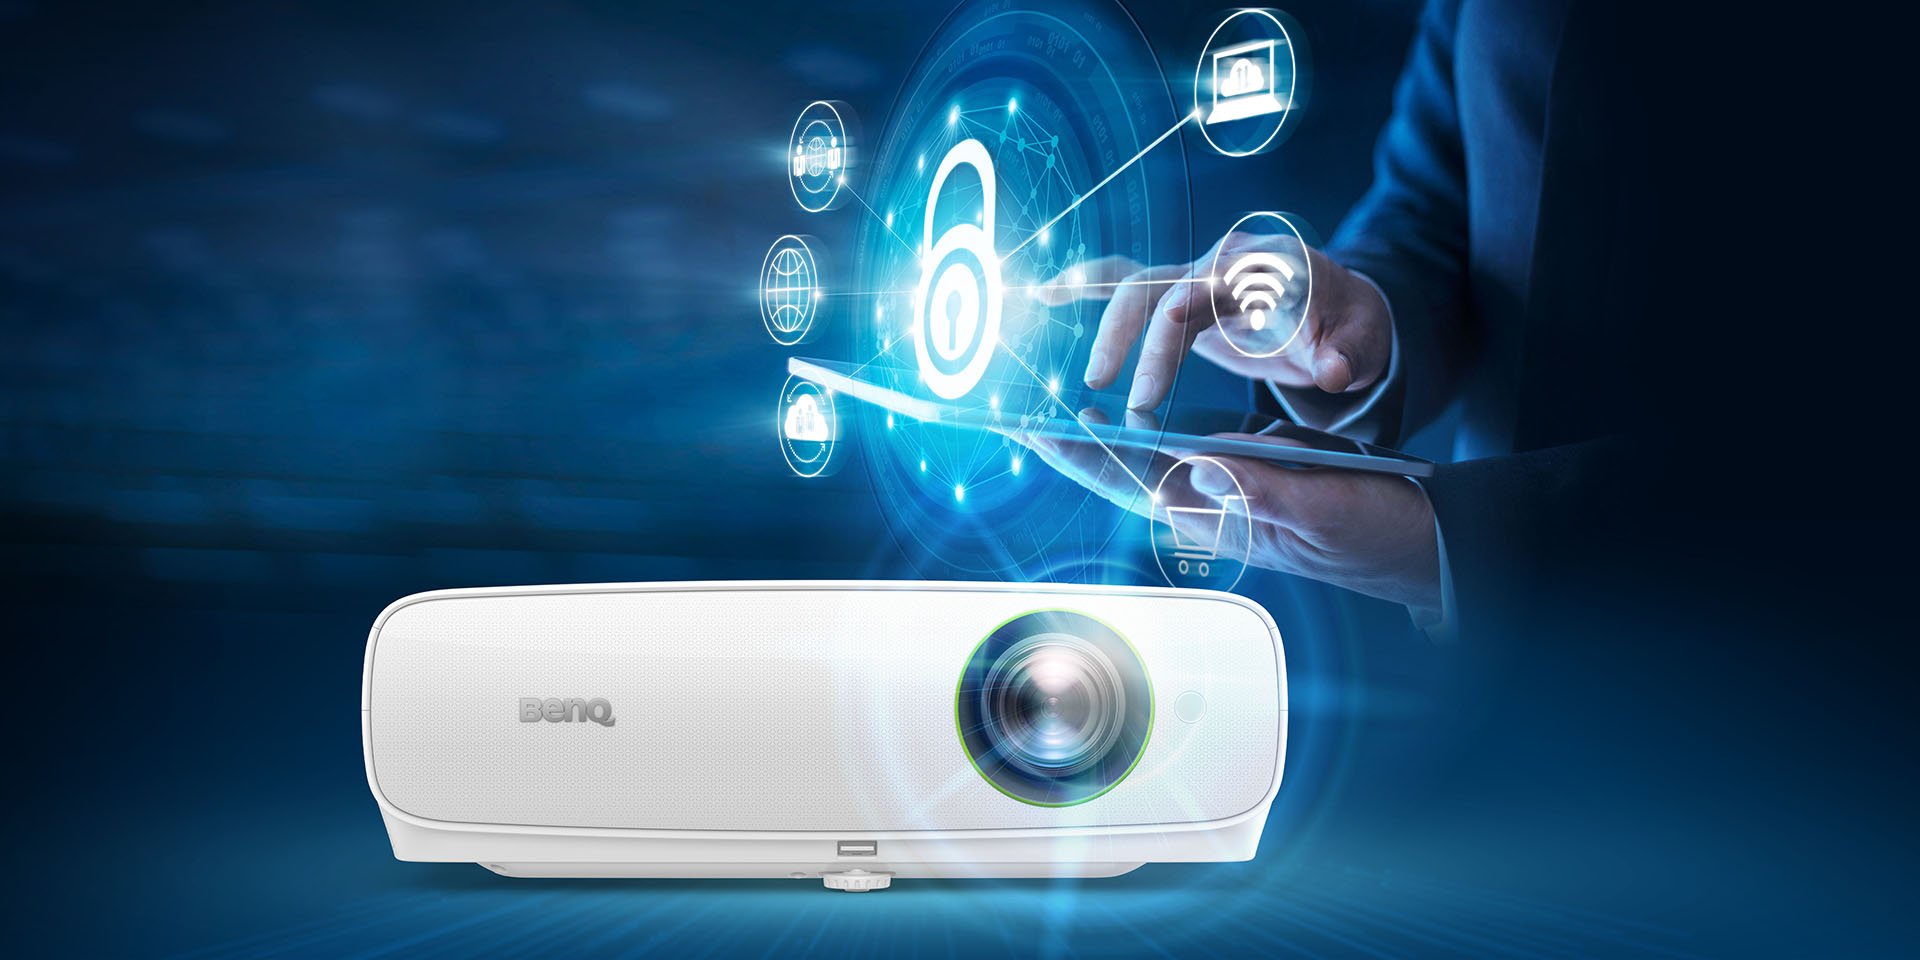 BenQ EH620 Windows Smart Projector Extends Your Organizations Data Security